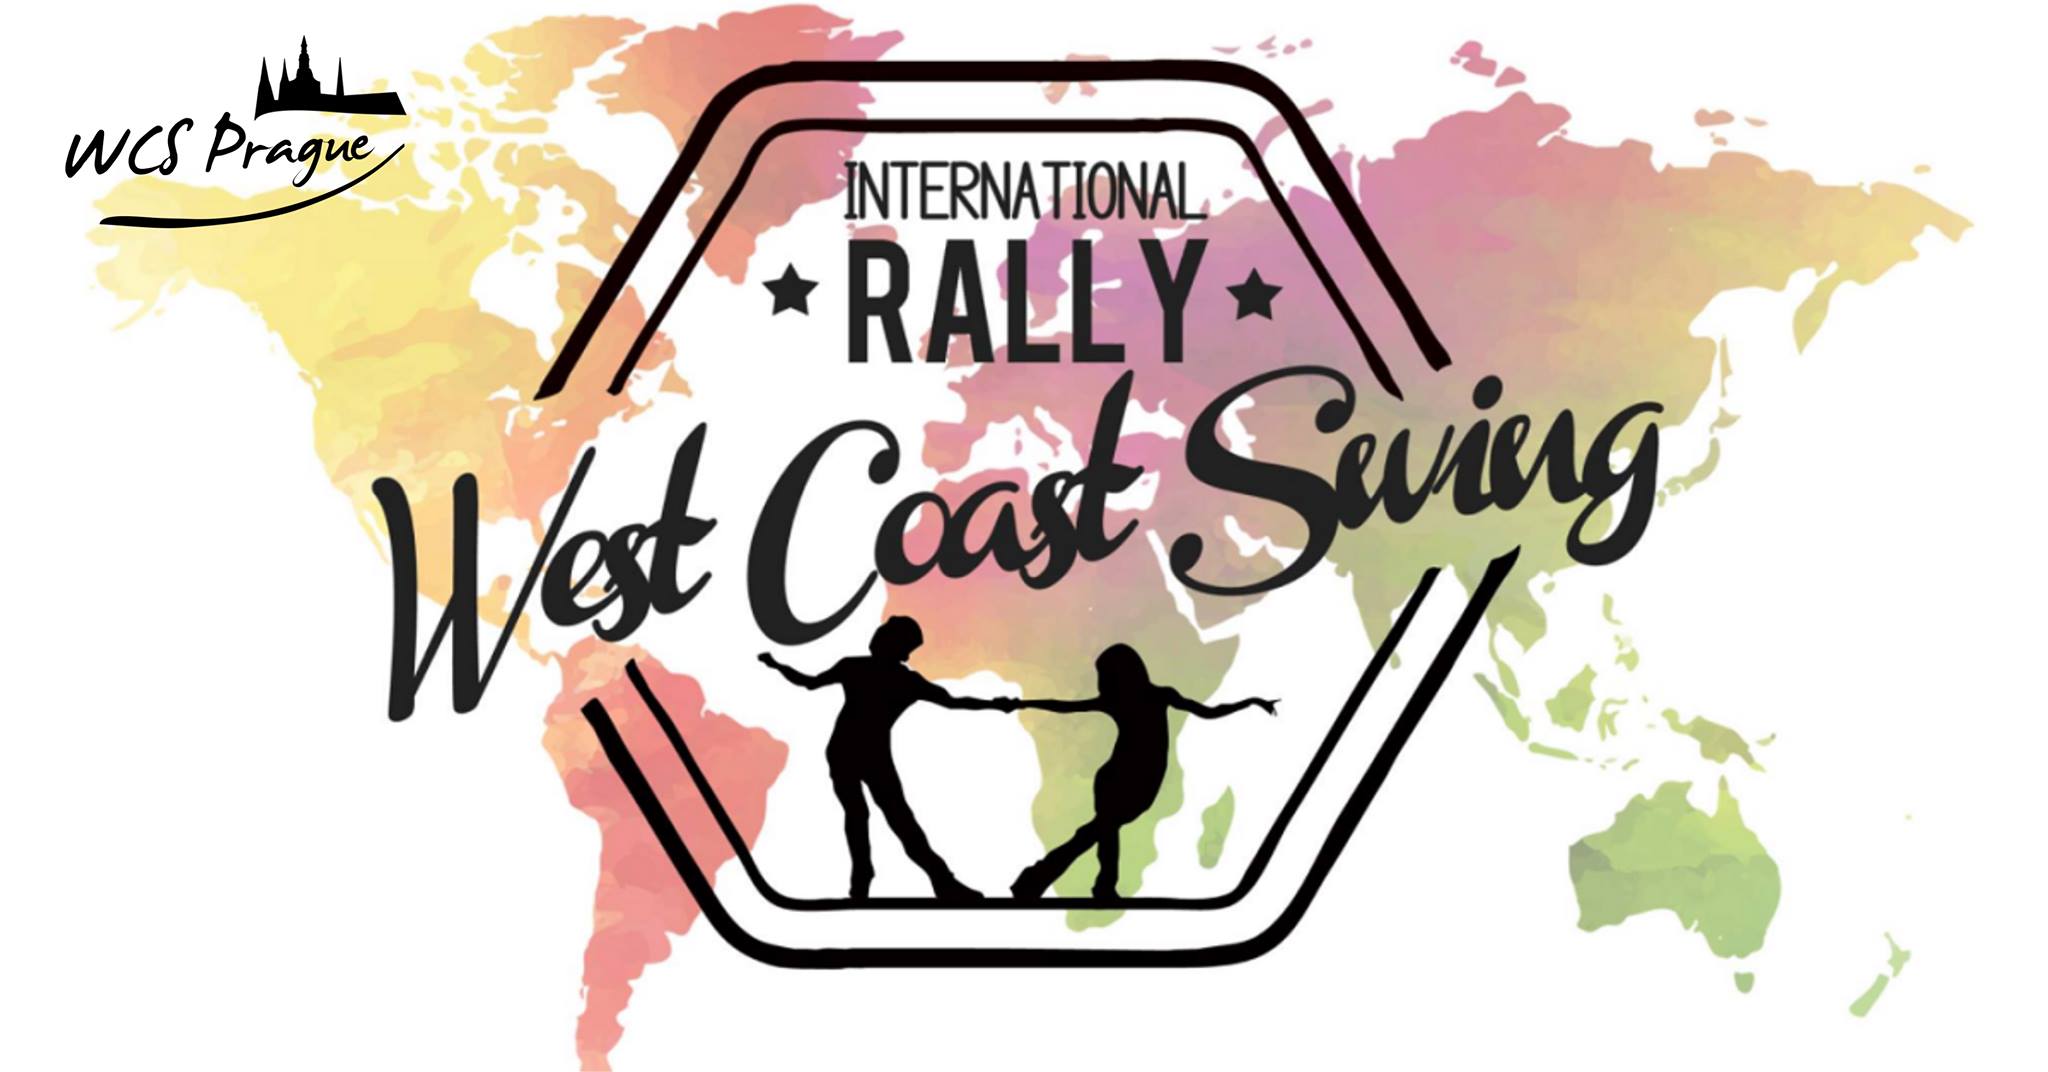 PRAHA – International Rally West Coast Swing